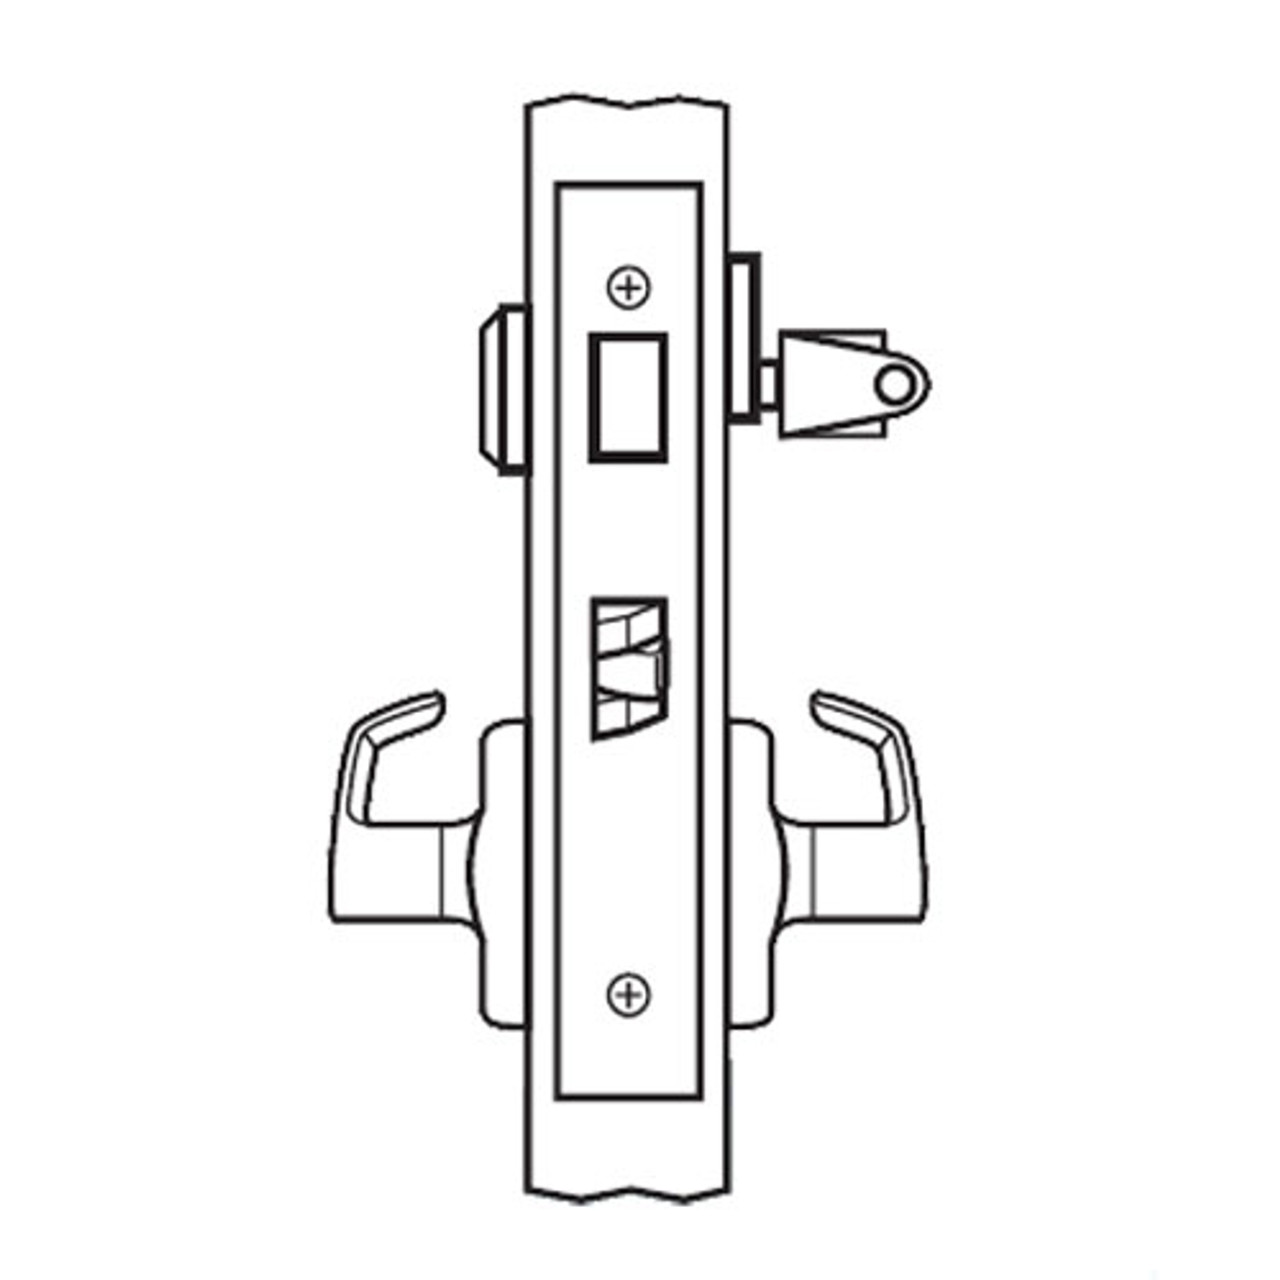 BM13-VH-03 Arrow Mortise Lock BM Series Front Door Lever with Ventura Design and H Escutcheon in Bright Brass